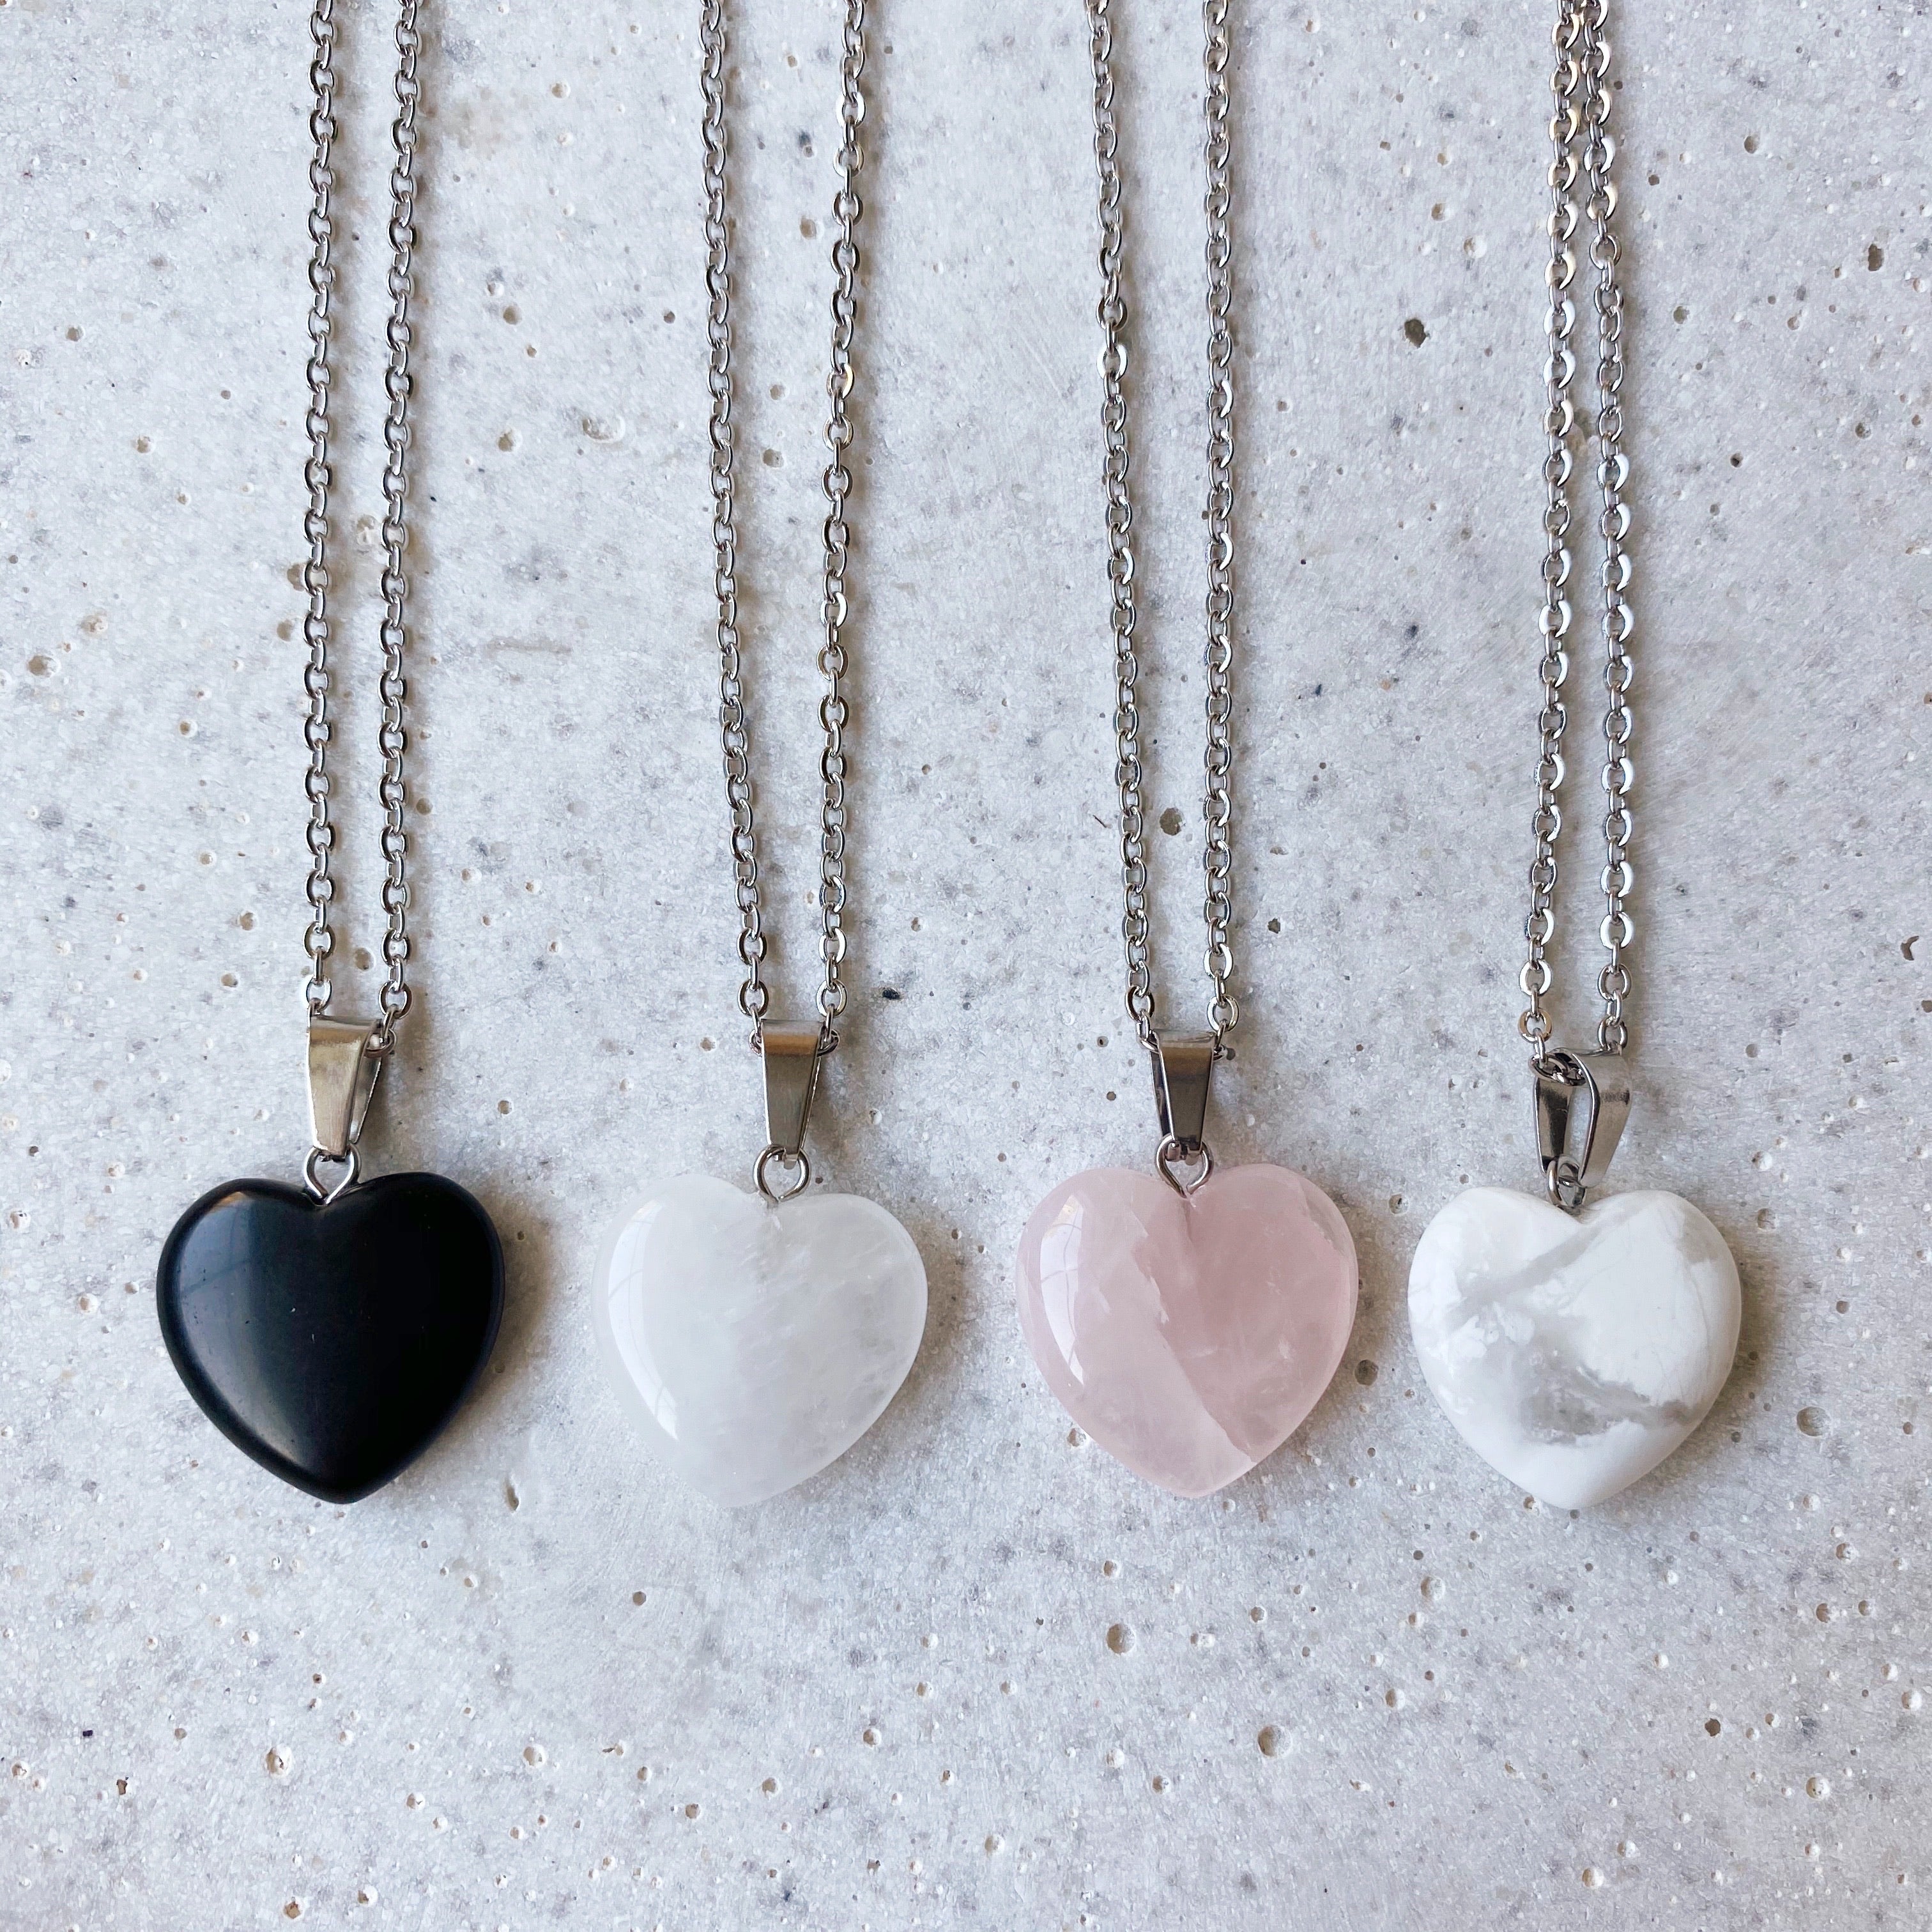 Stone Heart Necklace - Rose Quartz